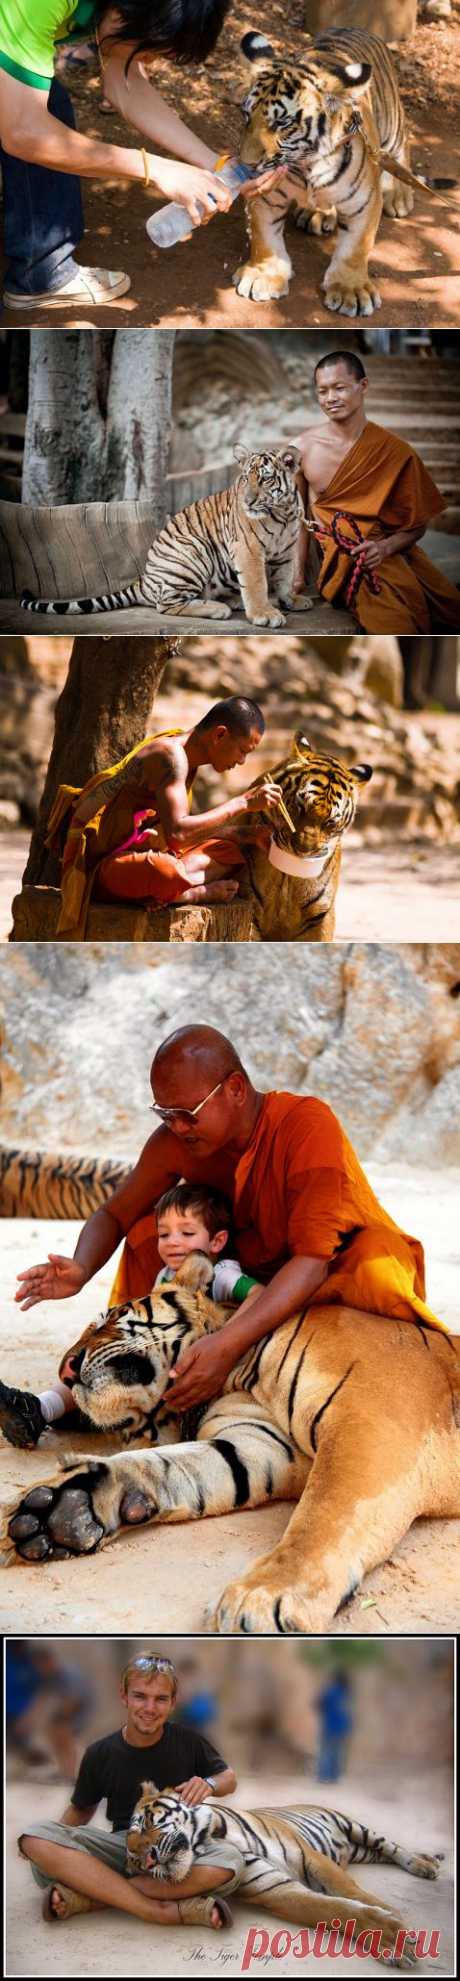 Храм тигров в Таиланде (26 фото)